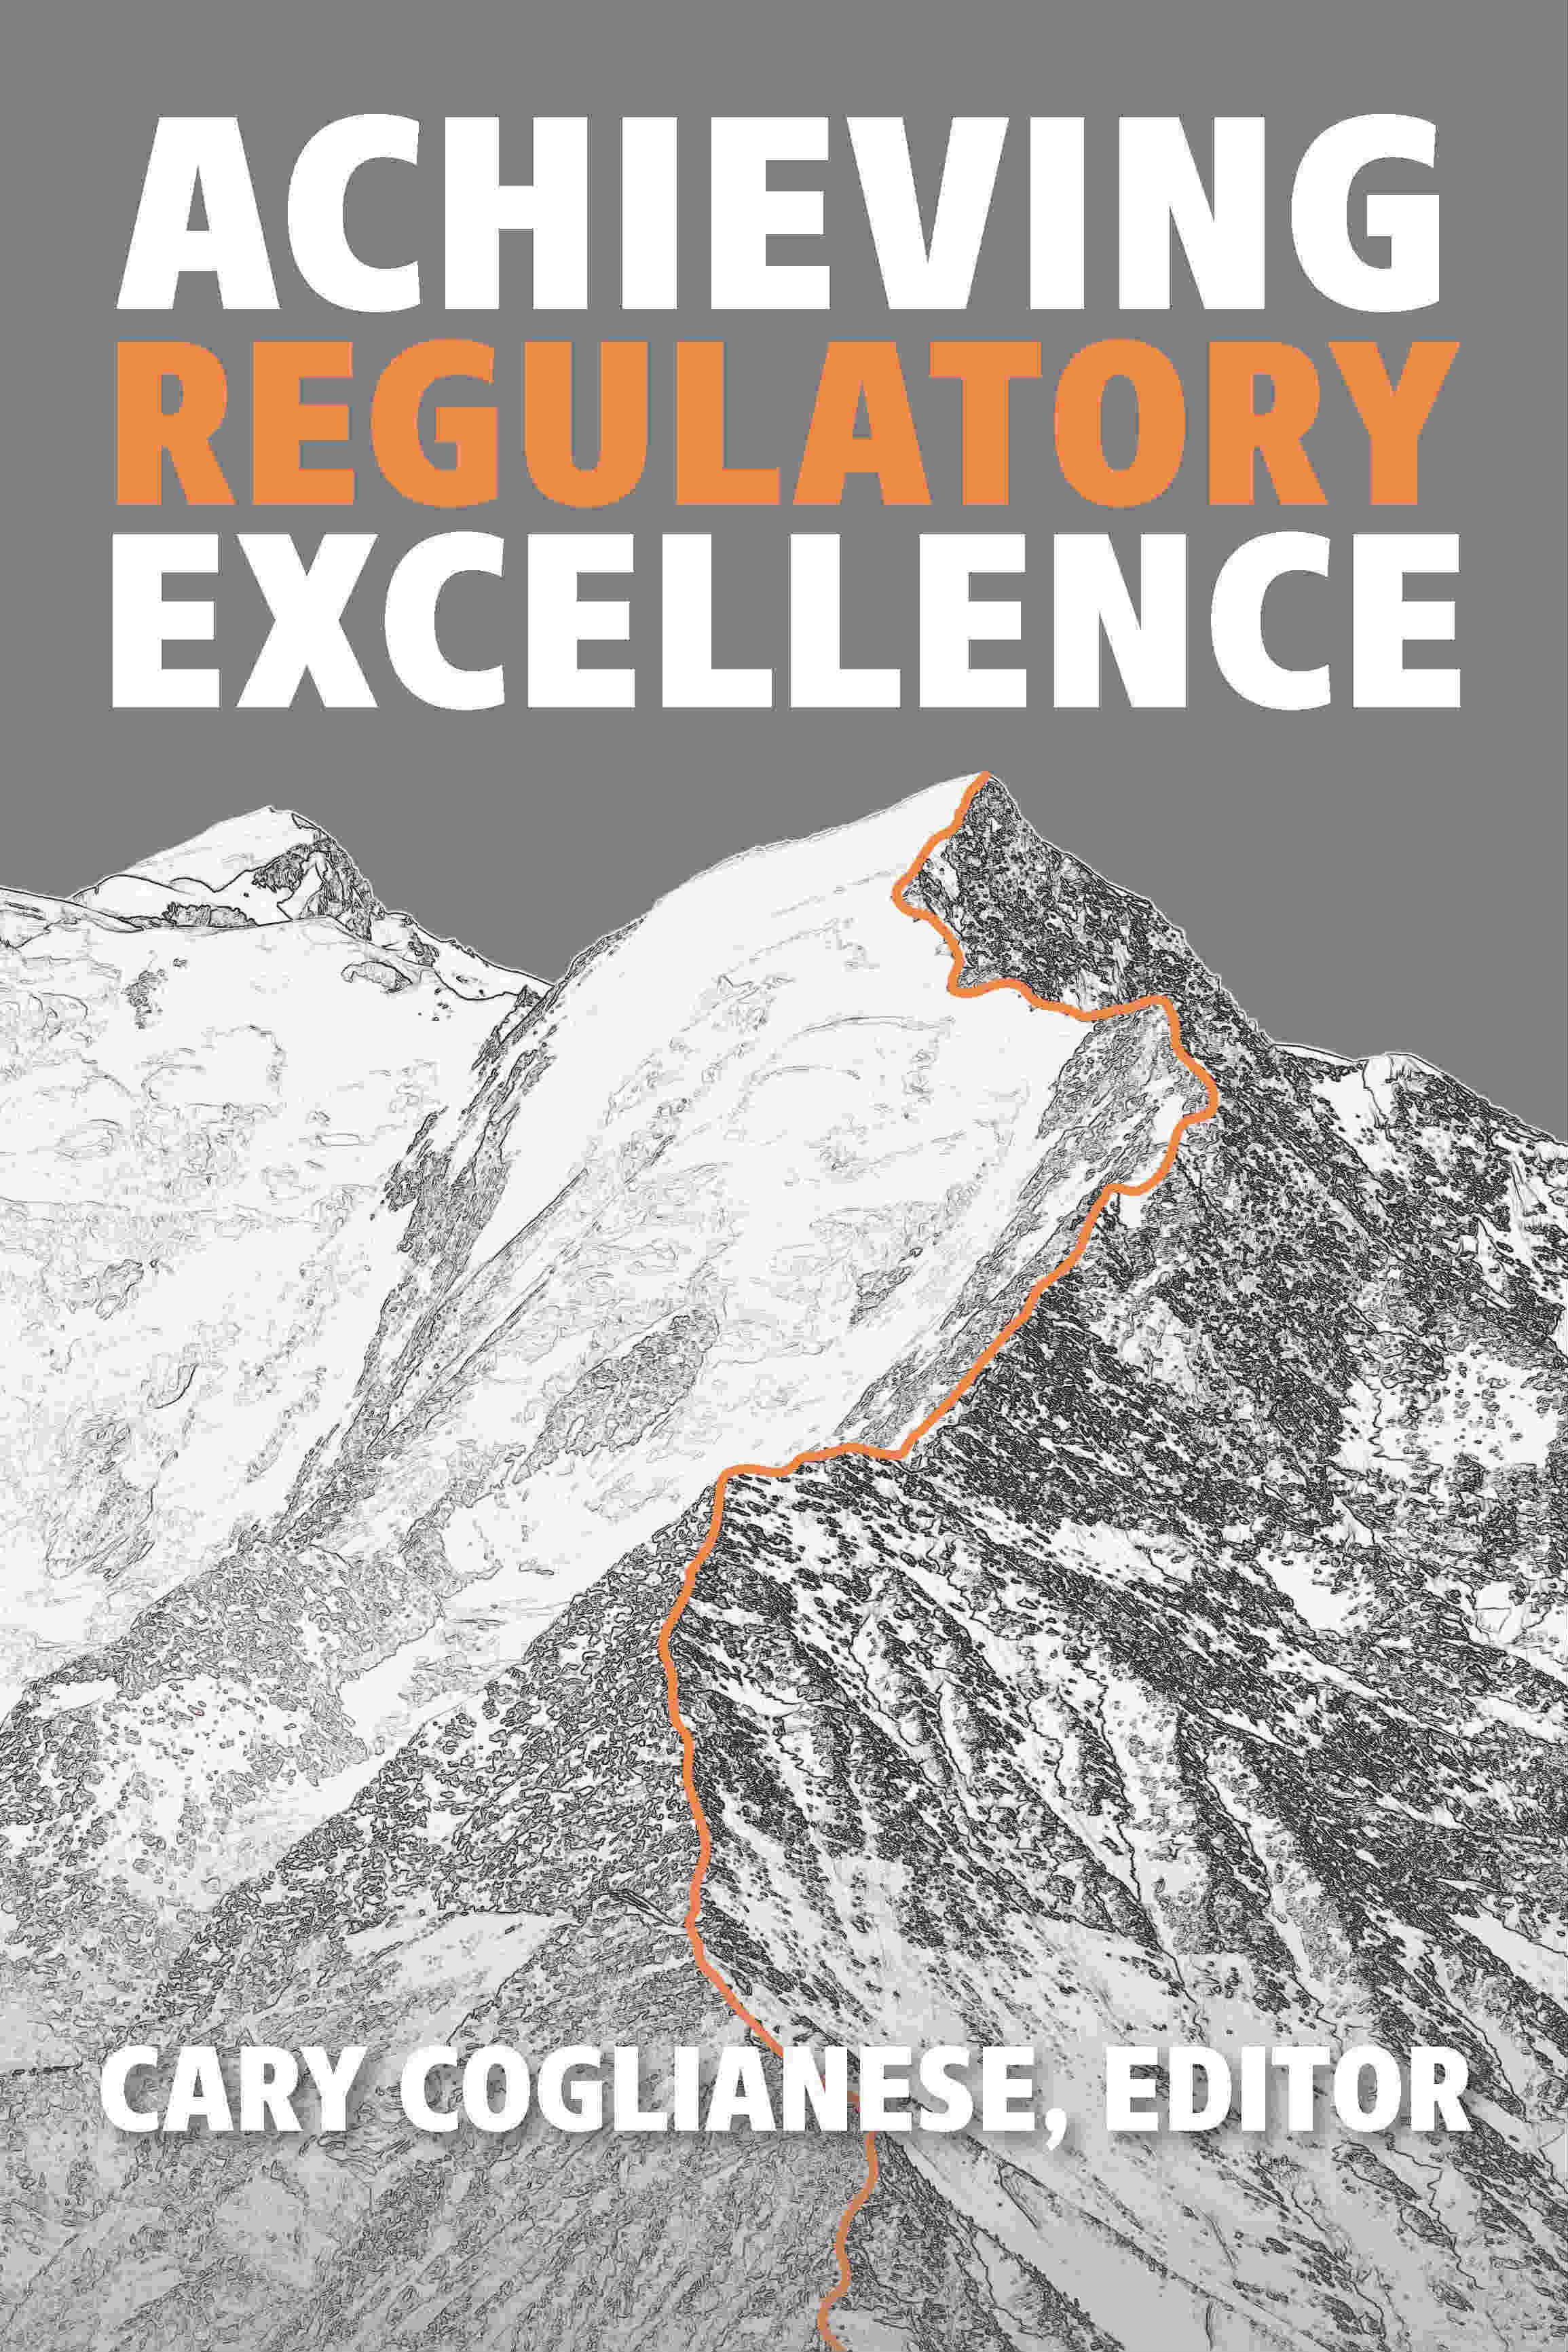 Regulatory Excellence